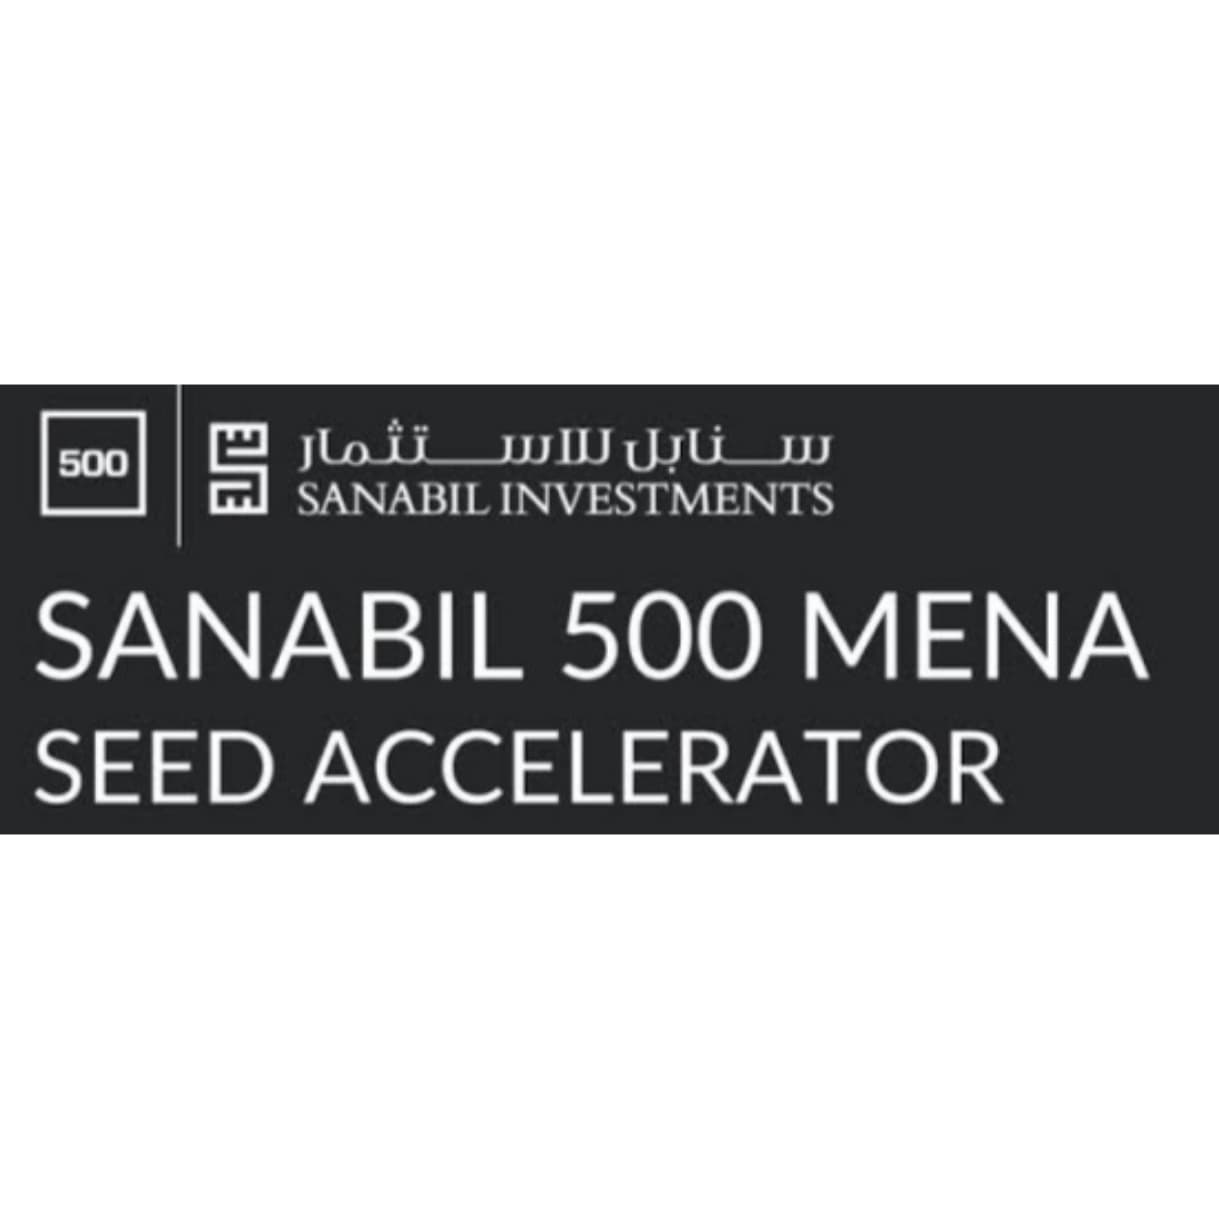 Sanabil 500 MENA Seed Accelerator